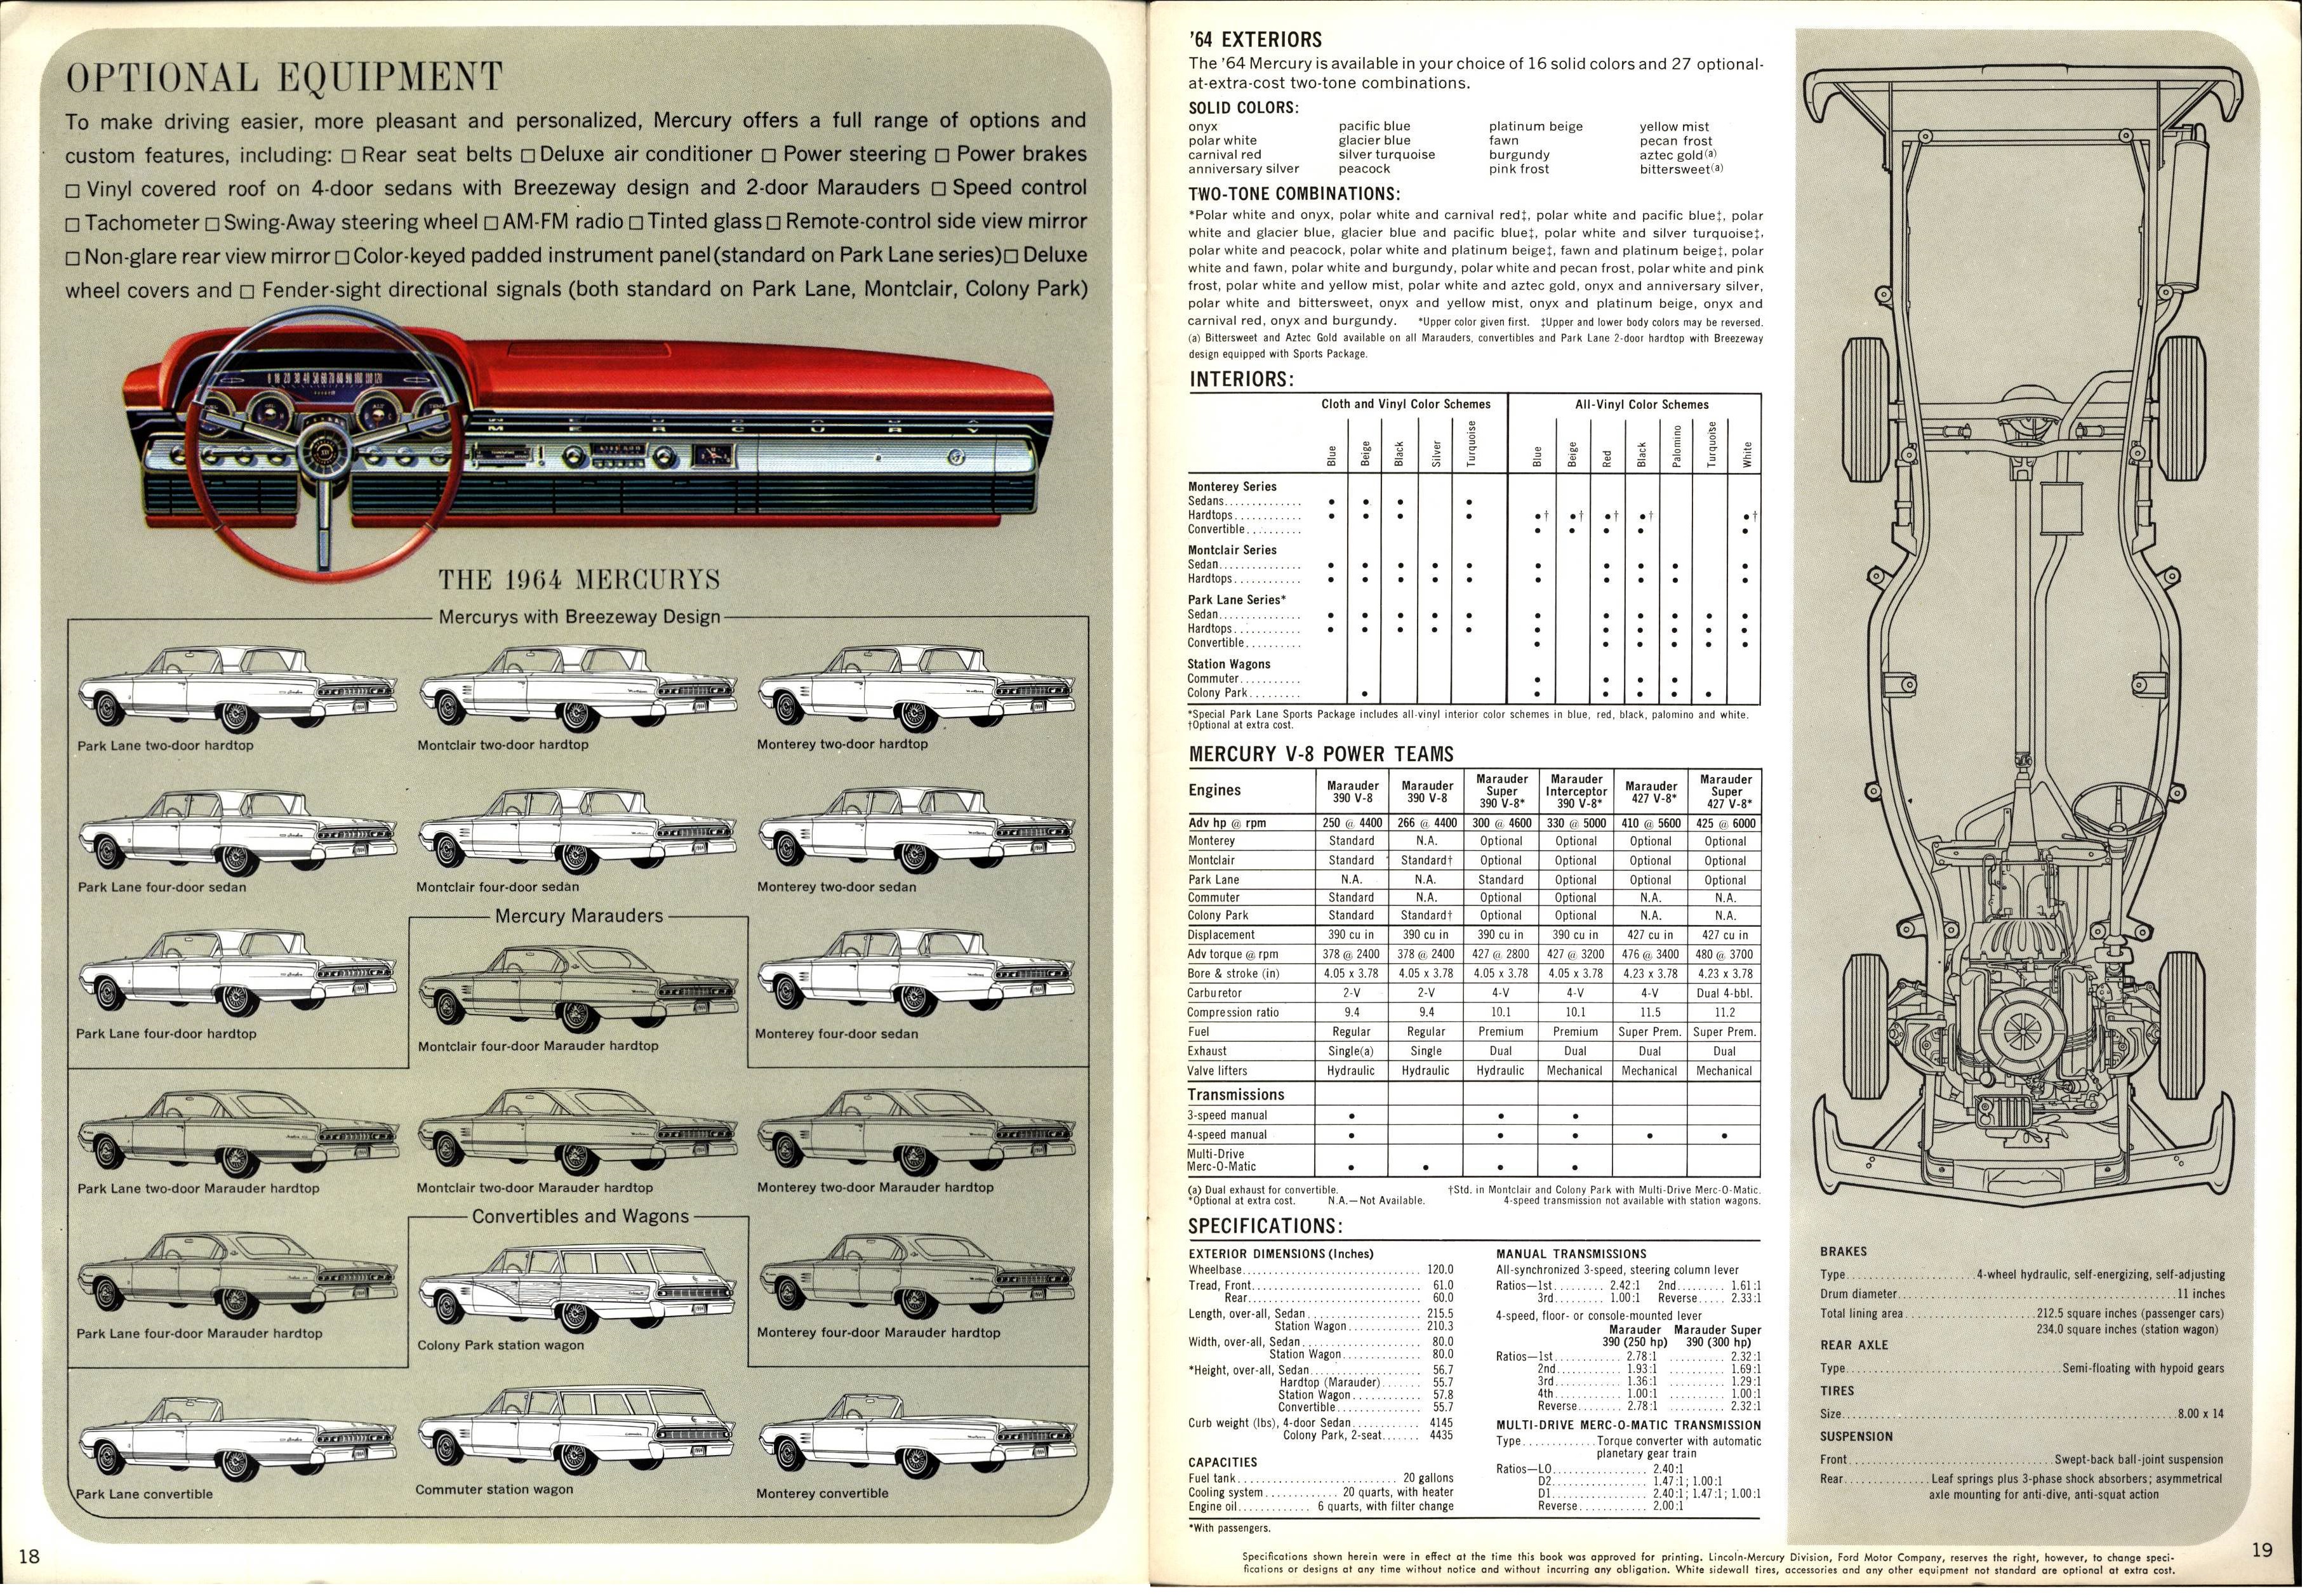 1964 Mercury Full Size Brochure 18-19